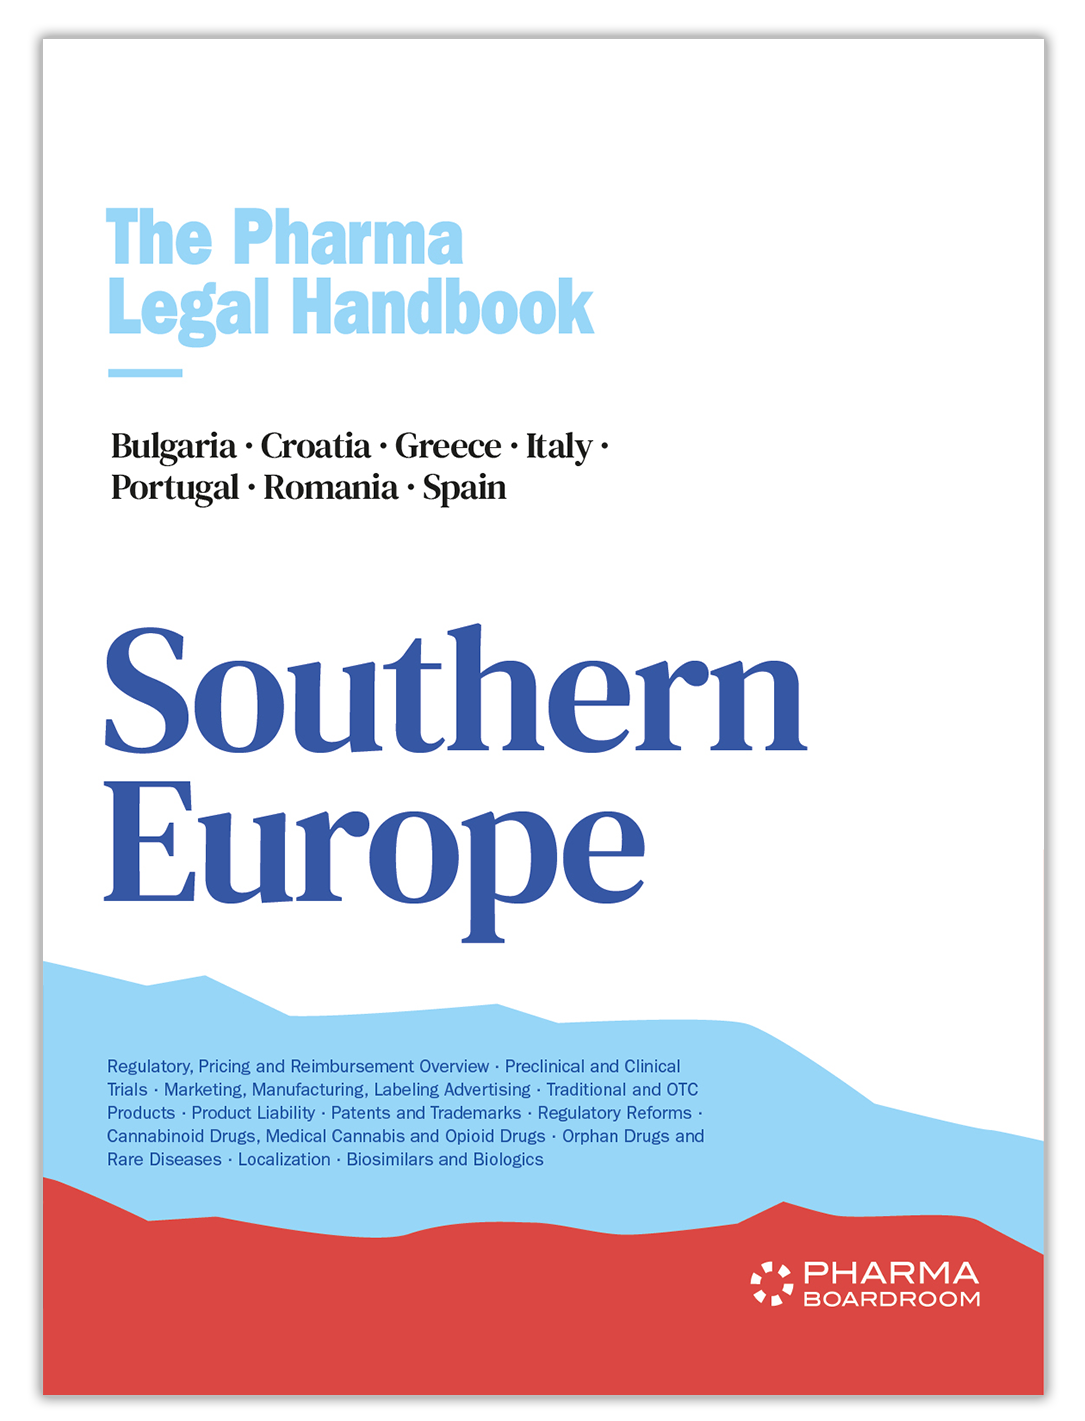 The Pharma Legal Handbook: Southern Europe (Bulgaria, Croatia, Greece, Italy, Portugal, Romania & Spain)